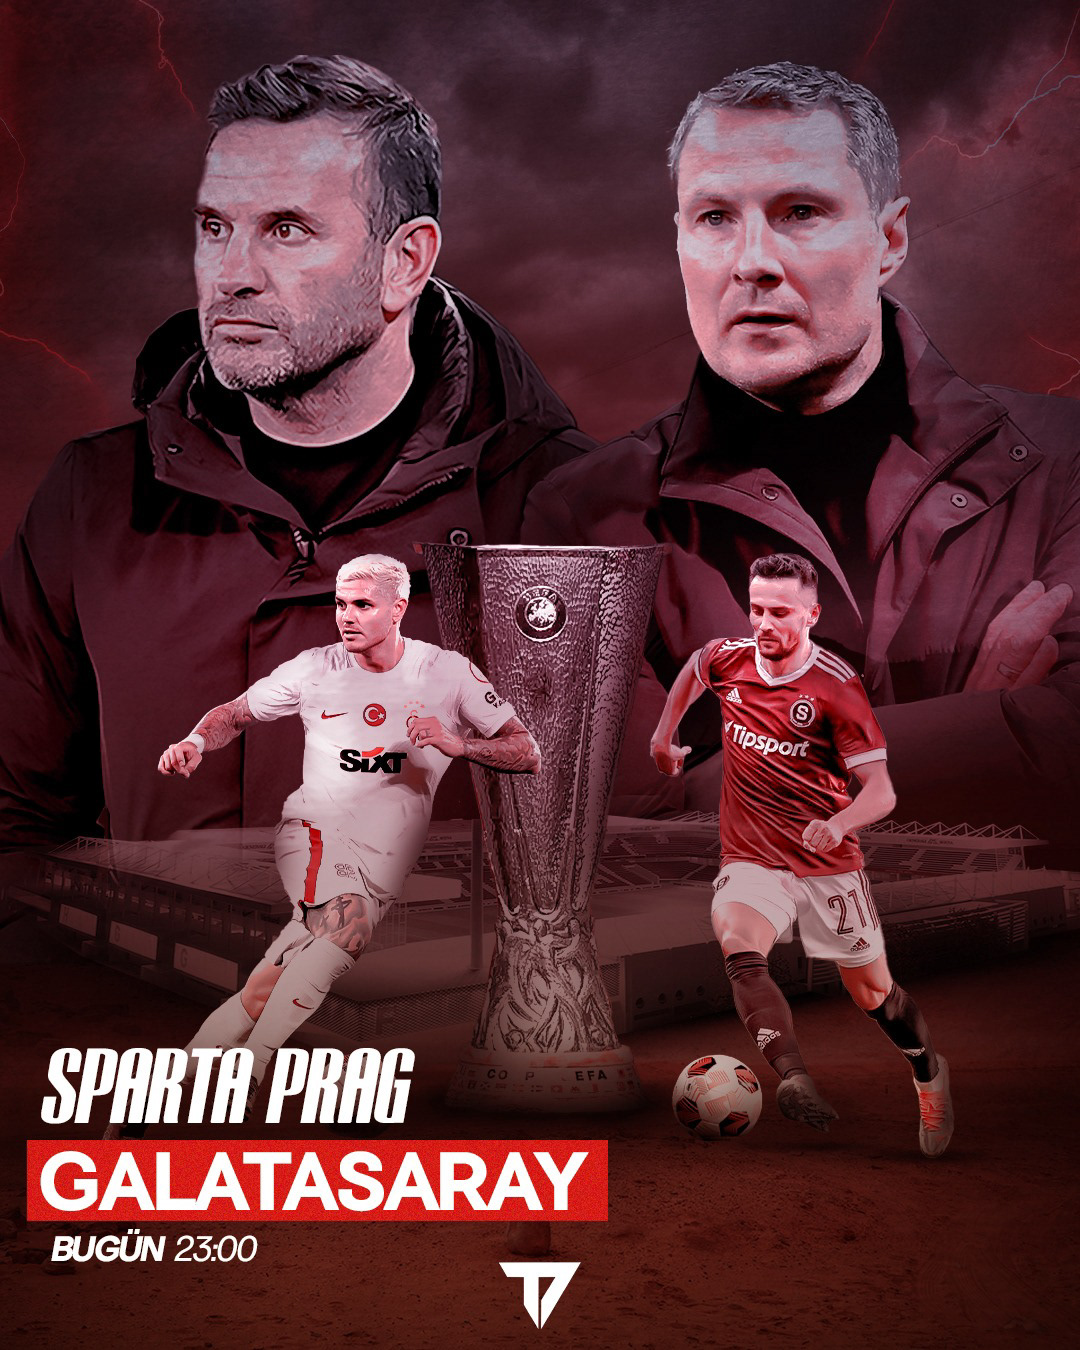 galatasaray Praha prague football Icardi soccer sports Social media post Graphic Designer spartapraha